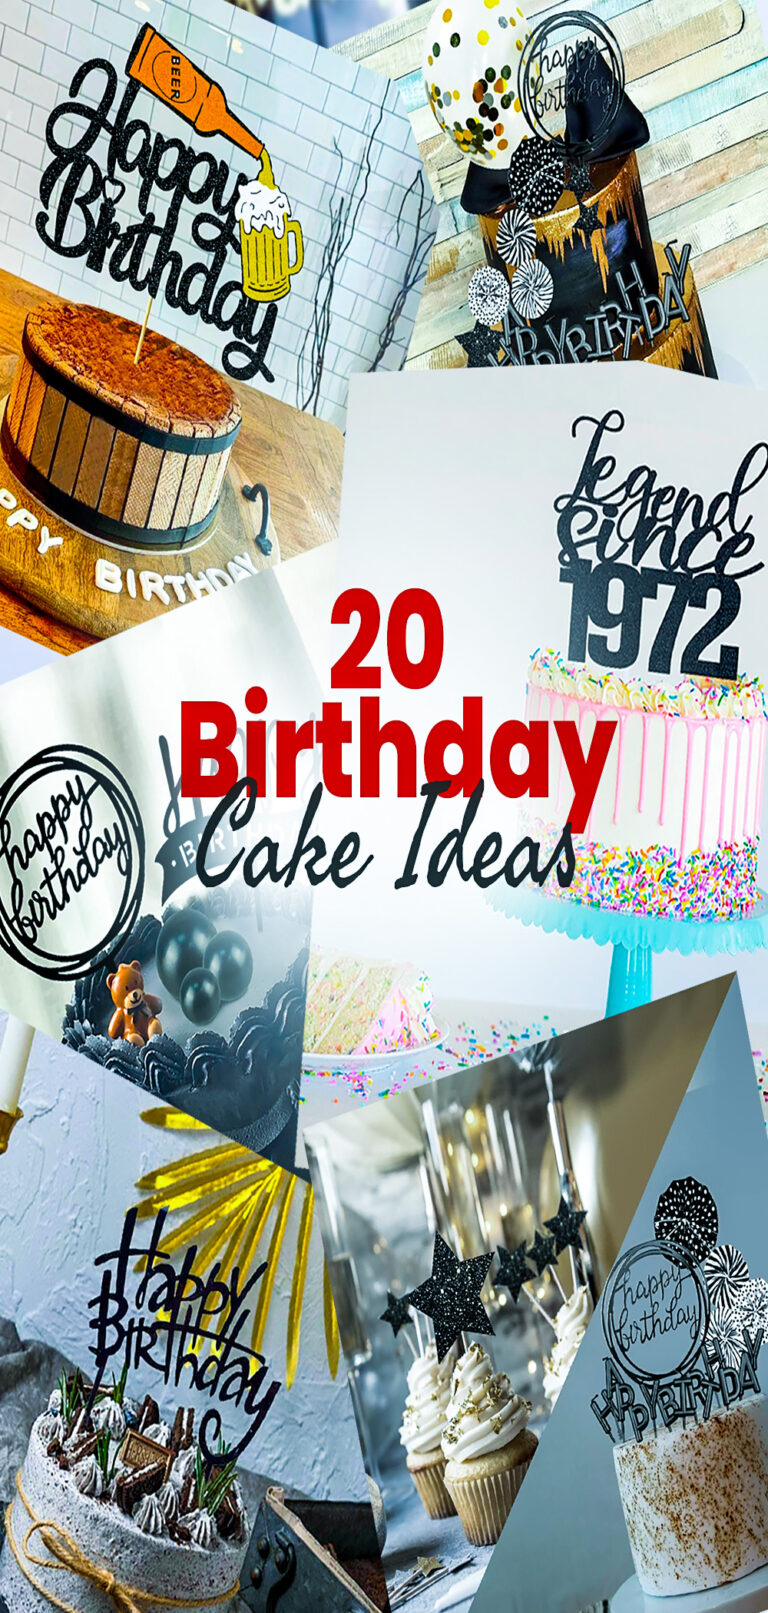 20 Birthday Cake Ideas for a Man